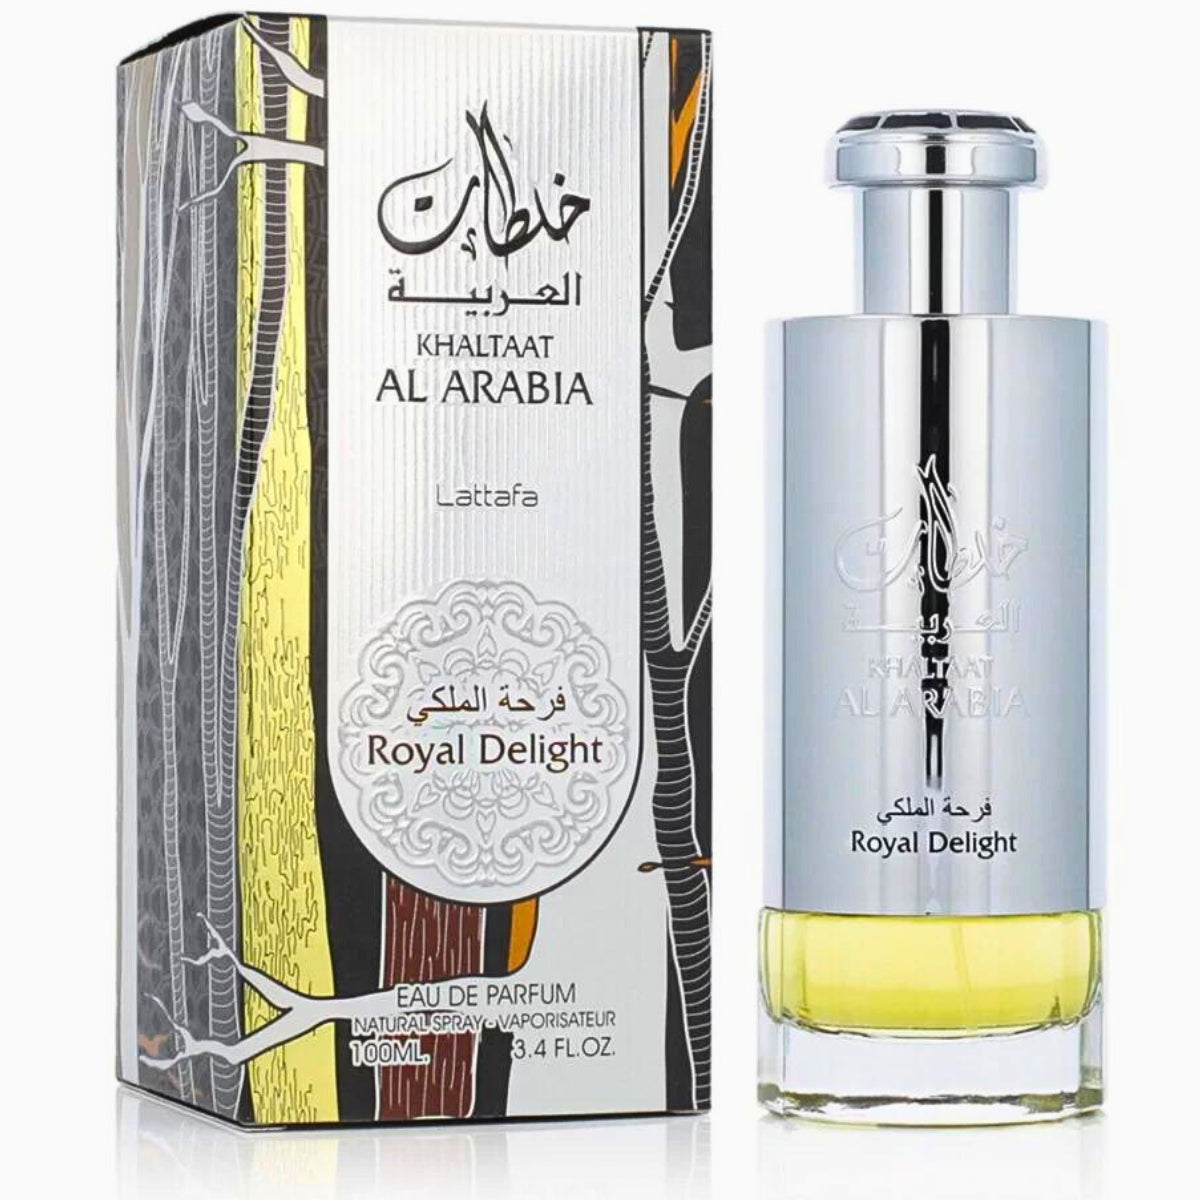 Lattafa Perfume Khaltaat Al Arabia Royal Delight (Silver) Eau de Parfum 100 ml